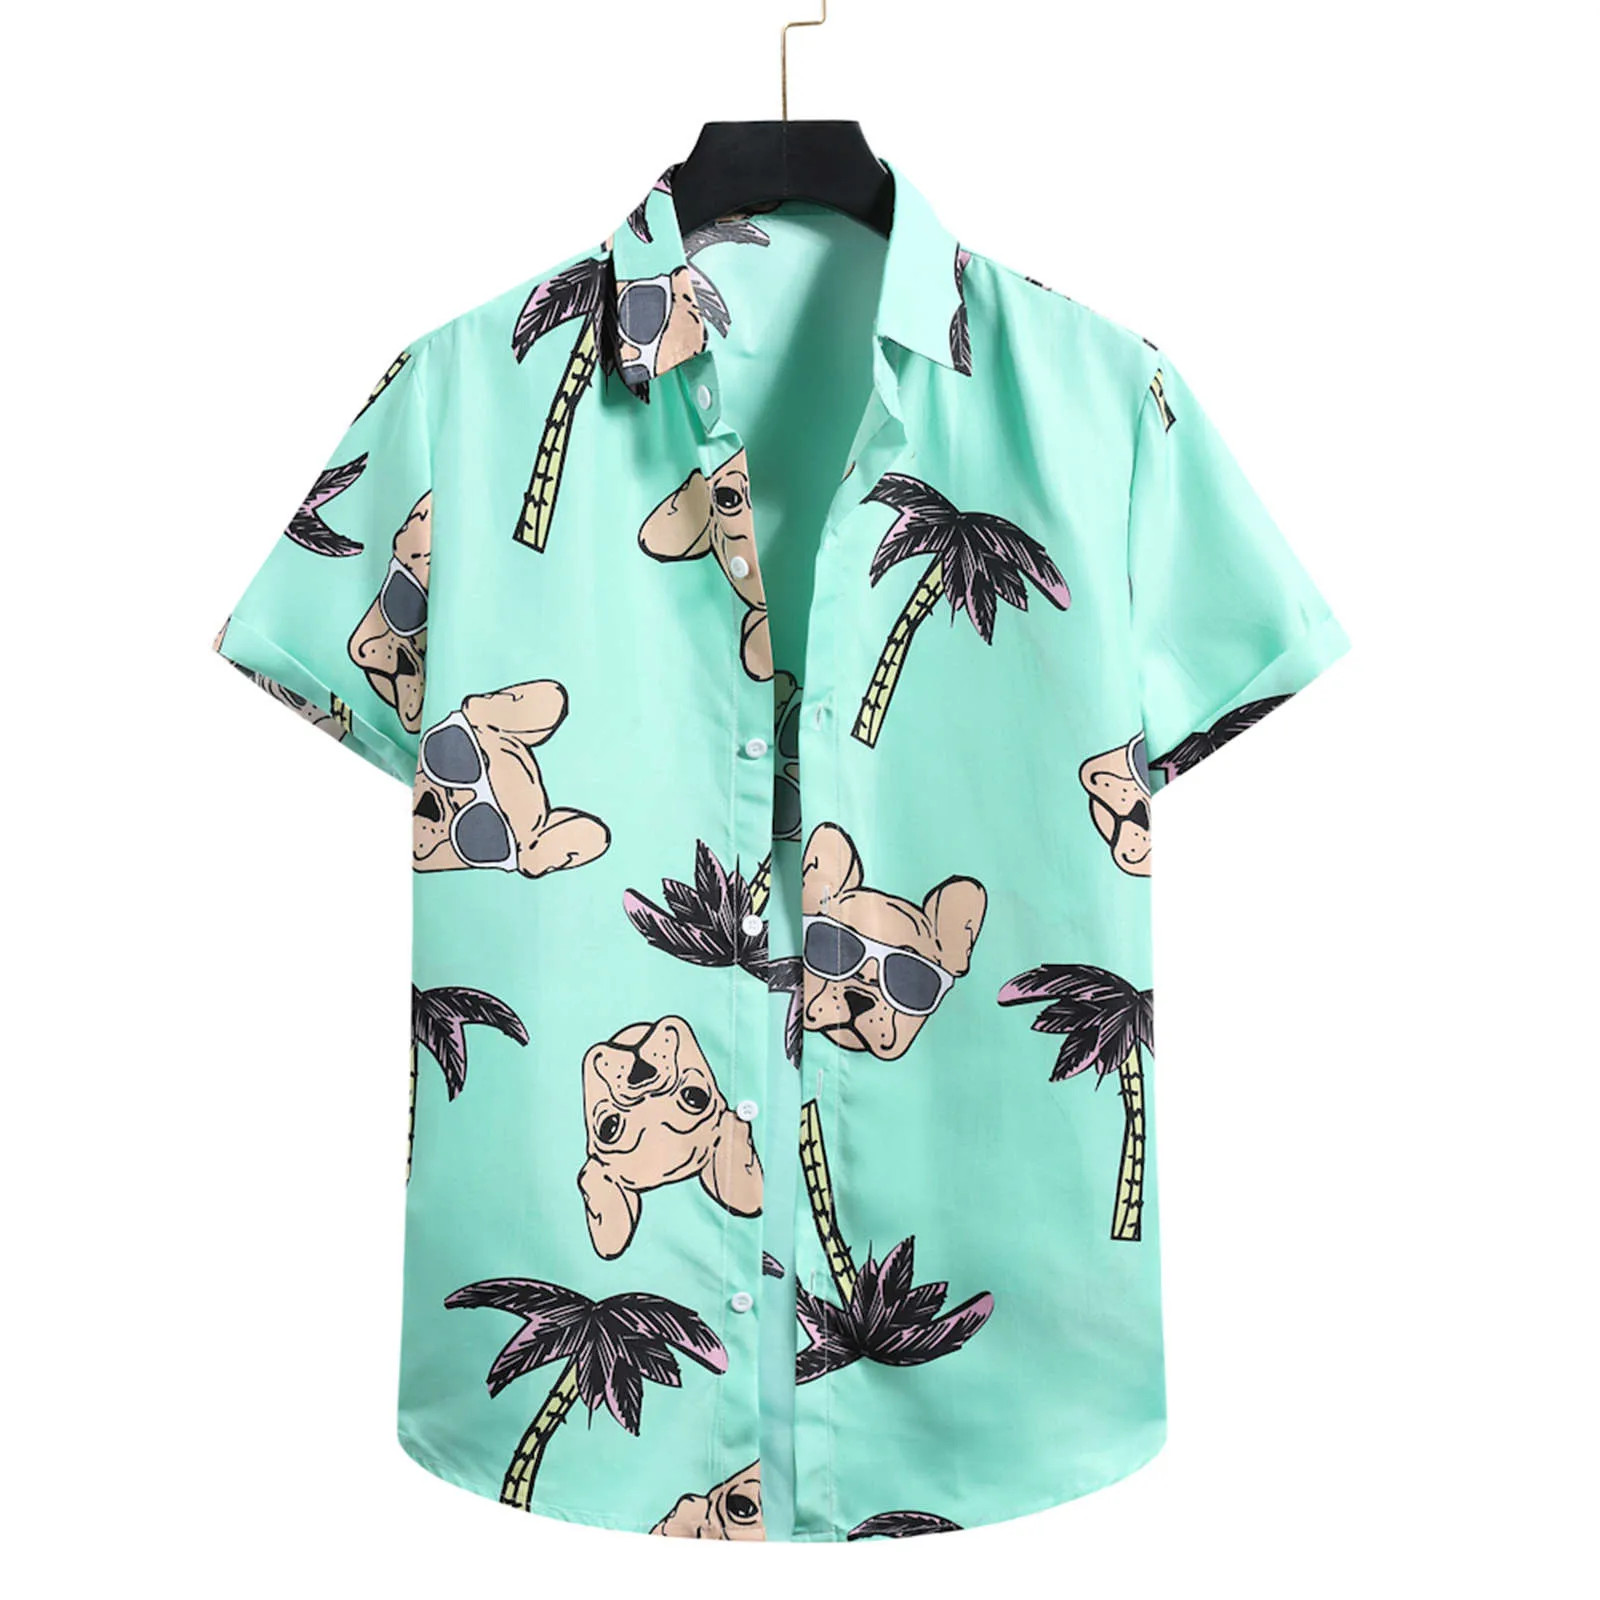 Men's Short Sleeve Cardigan Beach Hawaiian Shirts Summer Turtleneck Shirts Trend Casual Clothing Cozy Tops